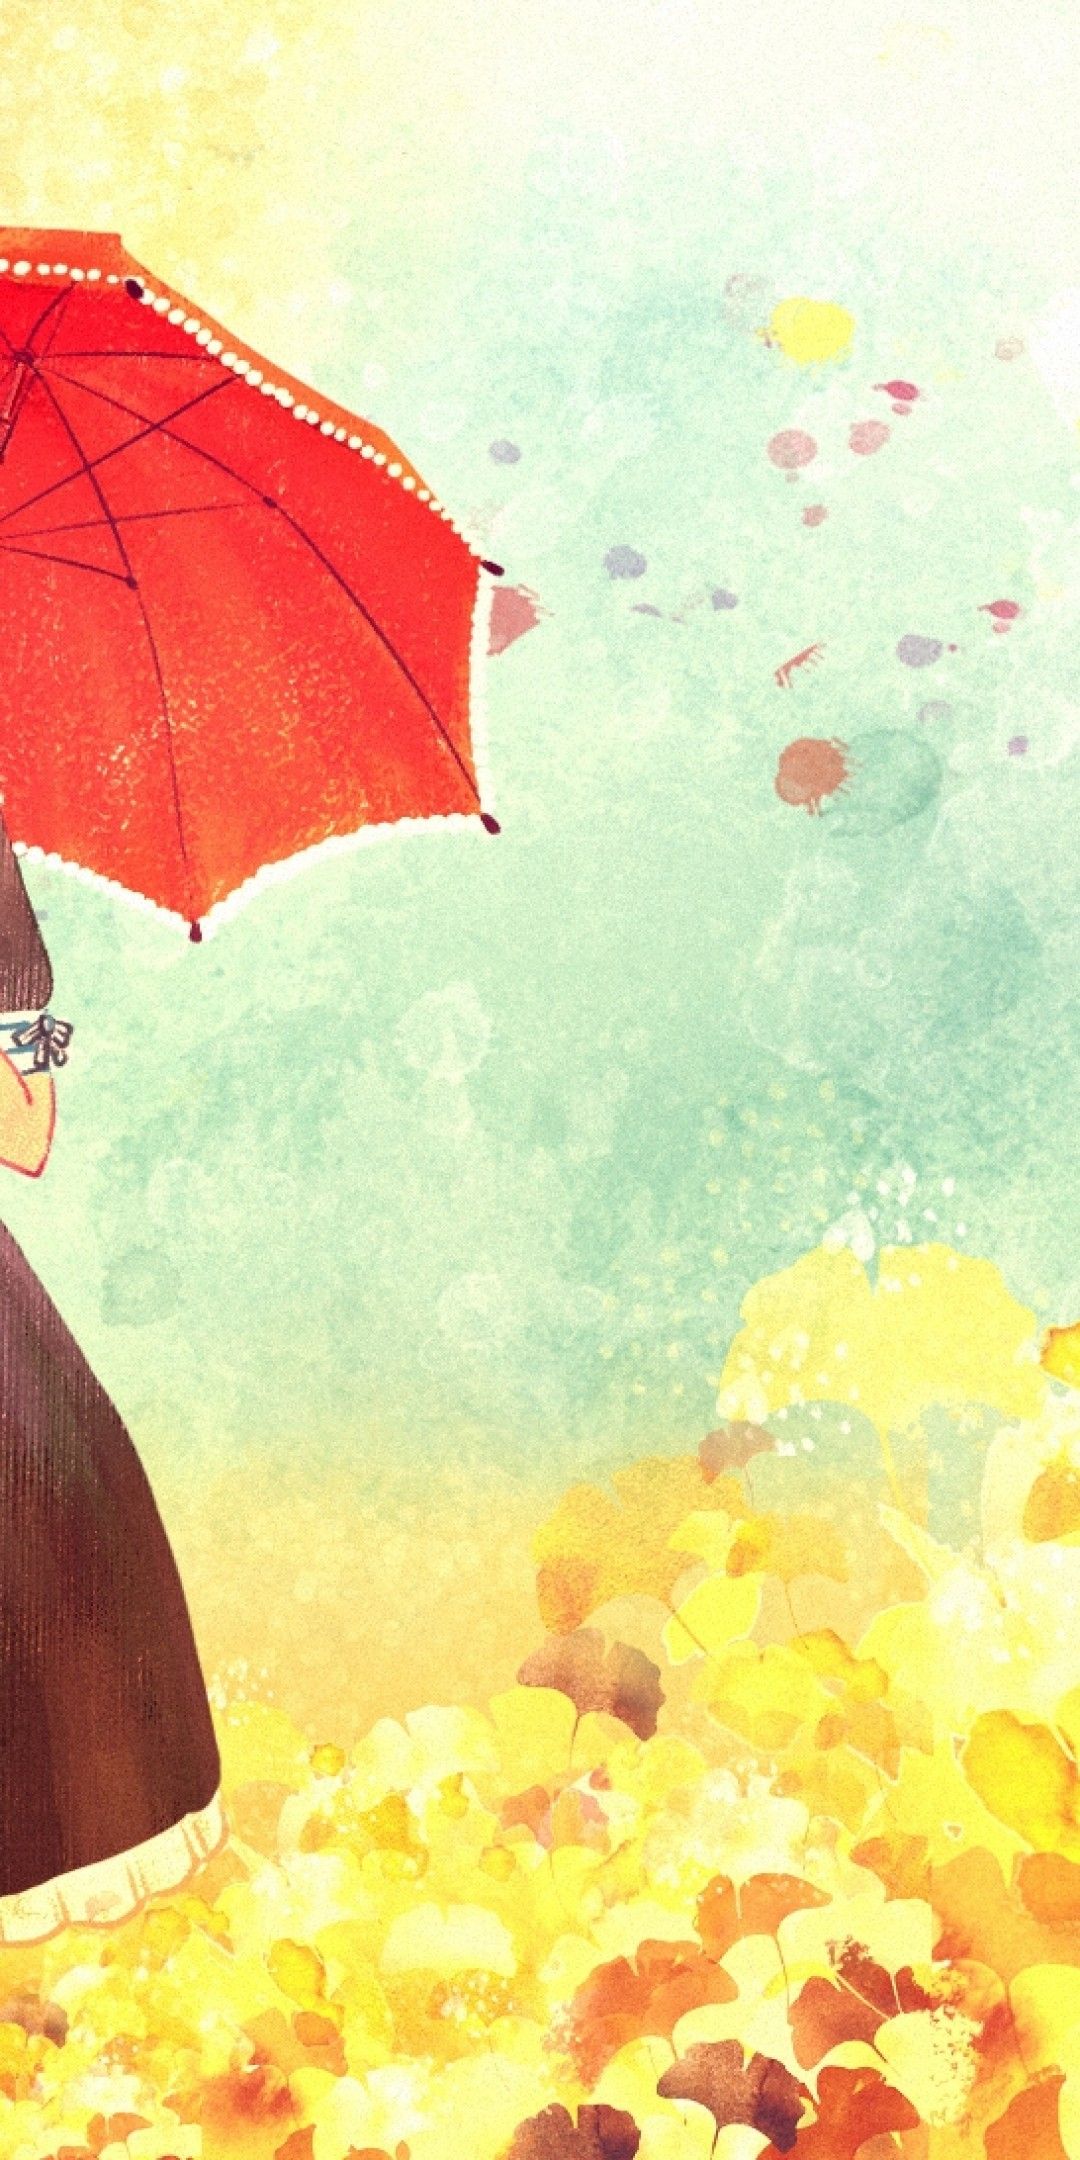 Download 1080x2160 Anime Girl, Pastel Colors, Umbrella, Autumn, Leaves, Raining Wallpaper for Huawei Mate 10